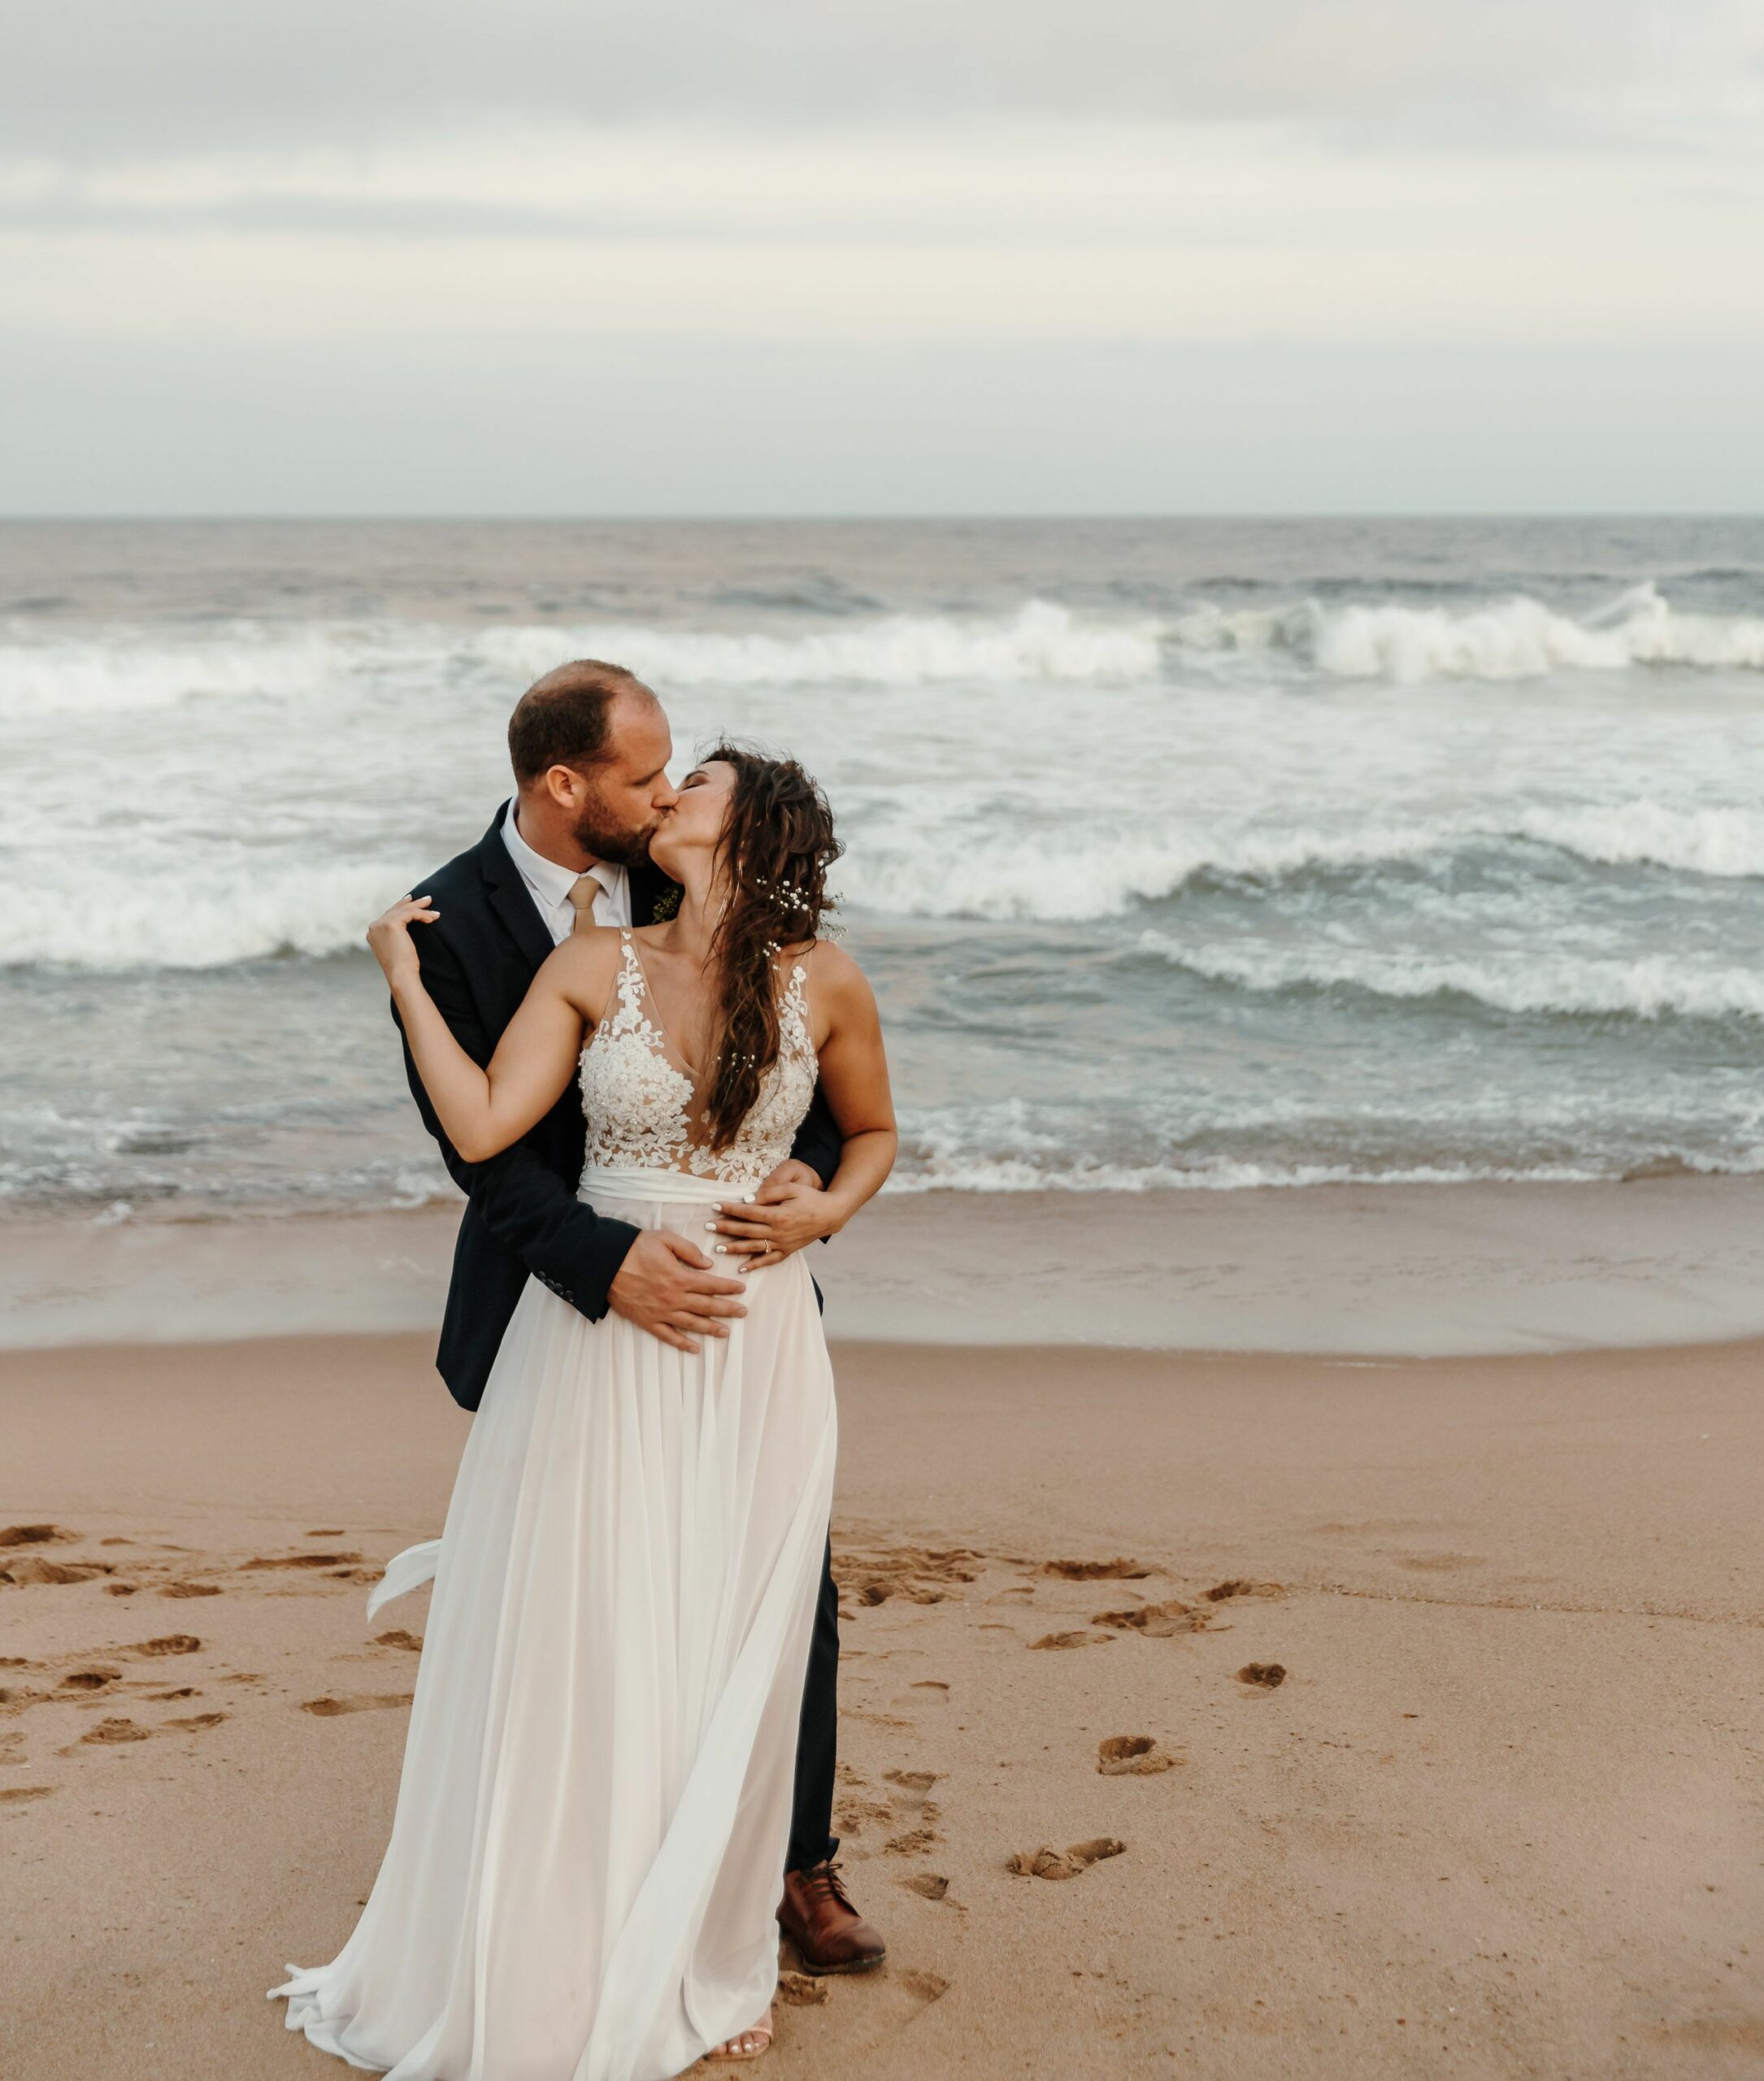 molteno couture beach wedding dress cape town bridal gown couple